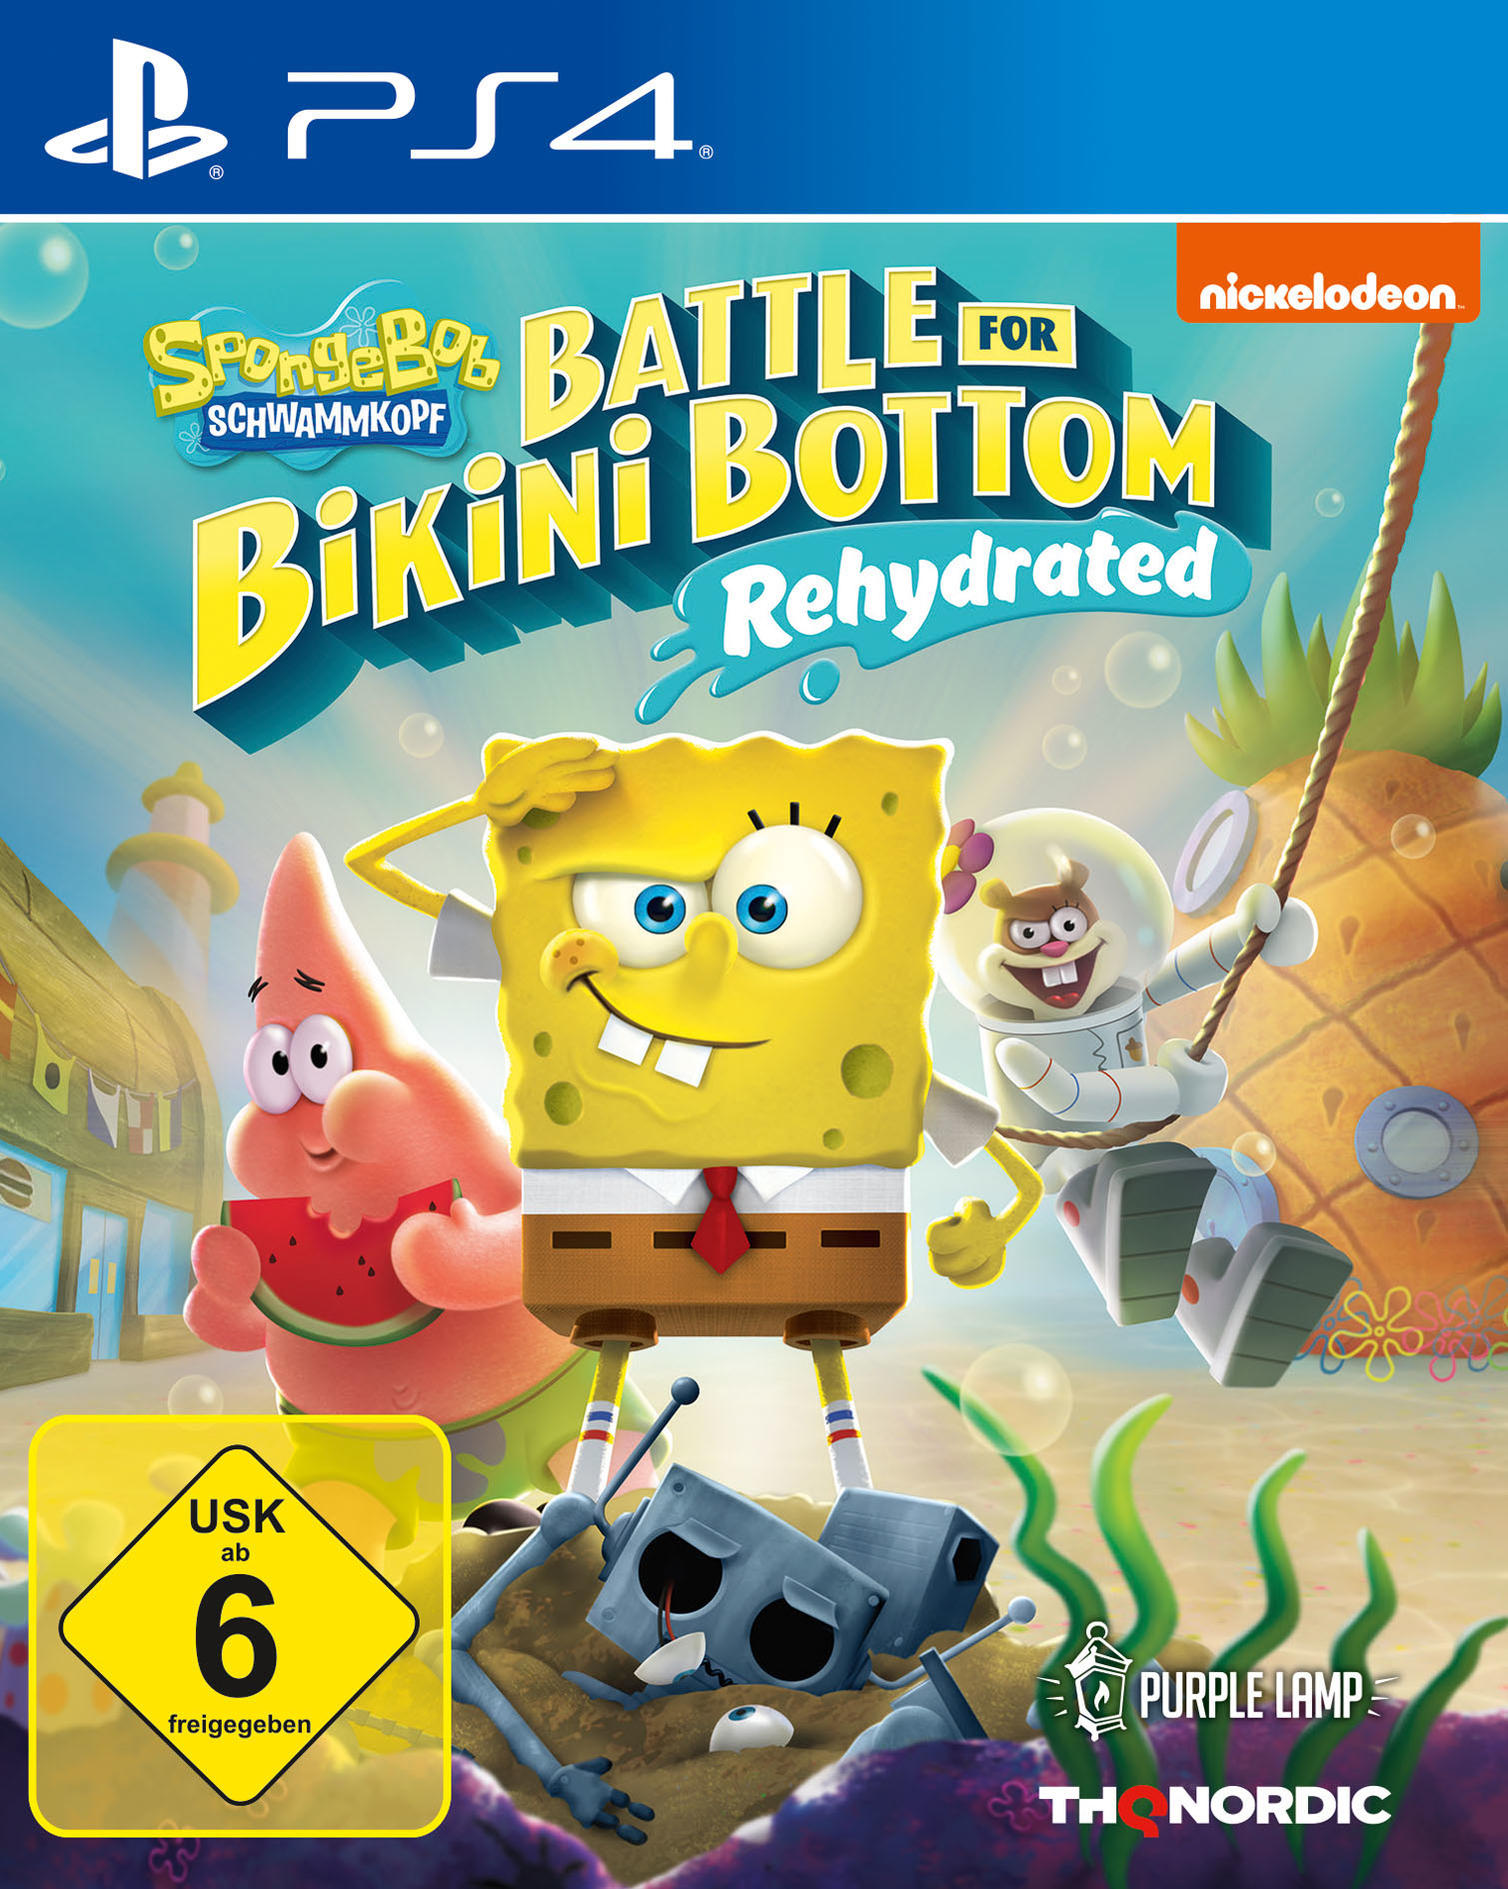 Bottom SquarePants: Spongebob [PlayStation Rehydrated - - 4] Bikini for Battle